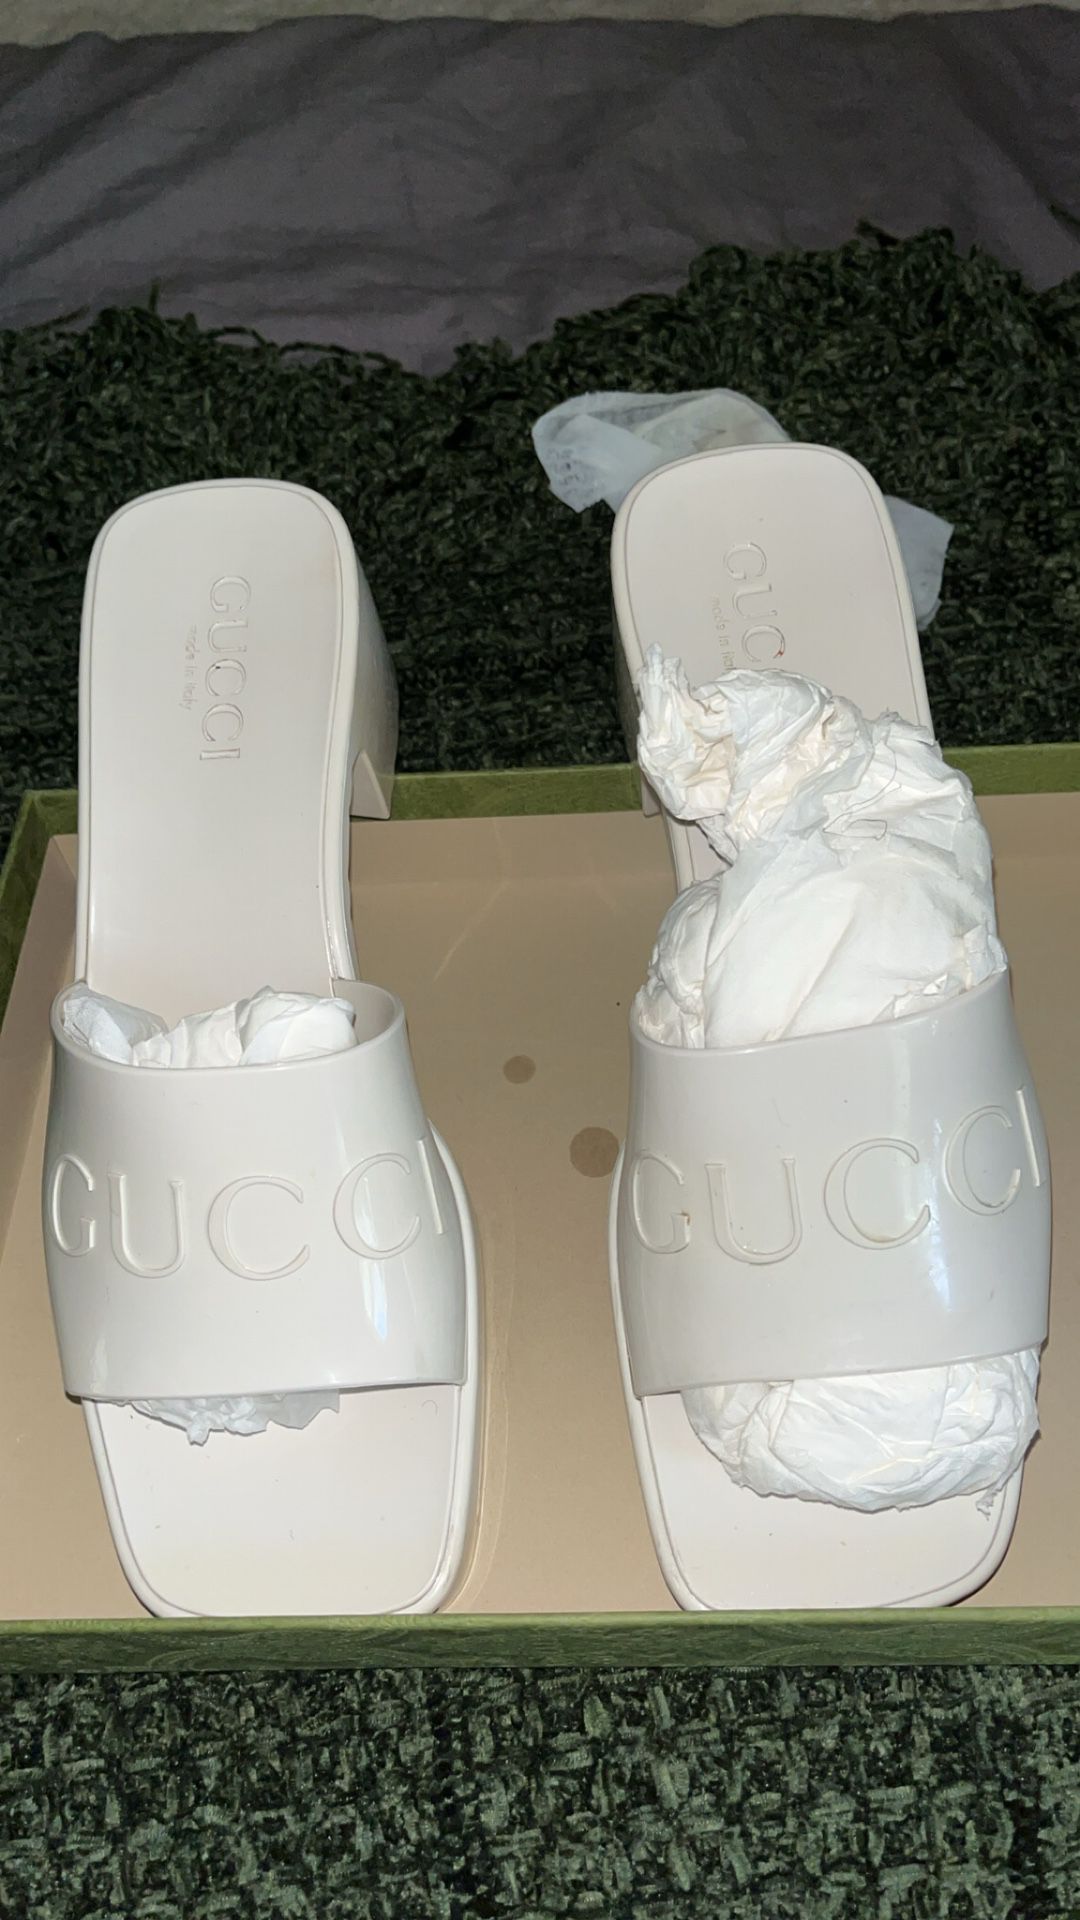 Gucci Jelly Sandal